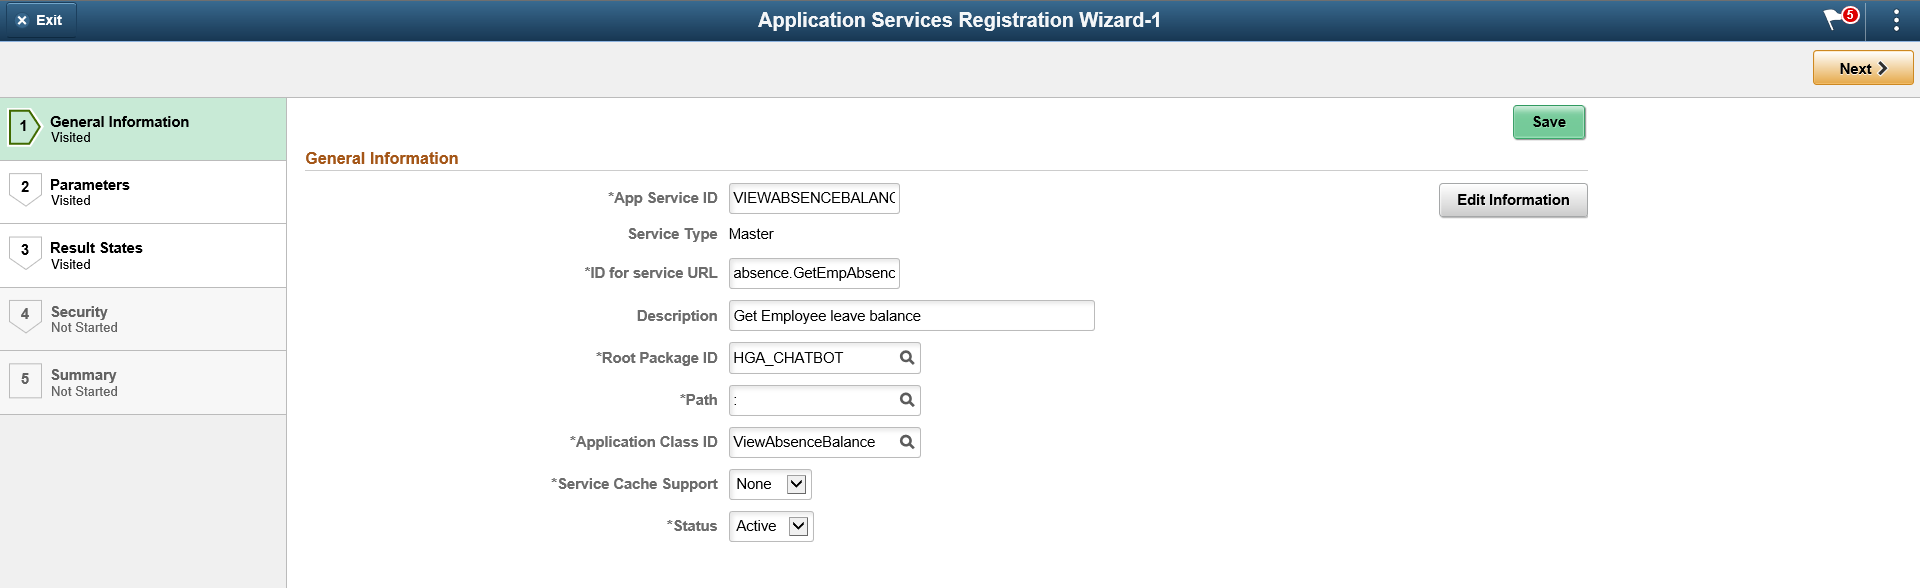 Application Service Registration Wizard - General Information page